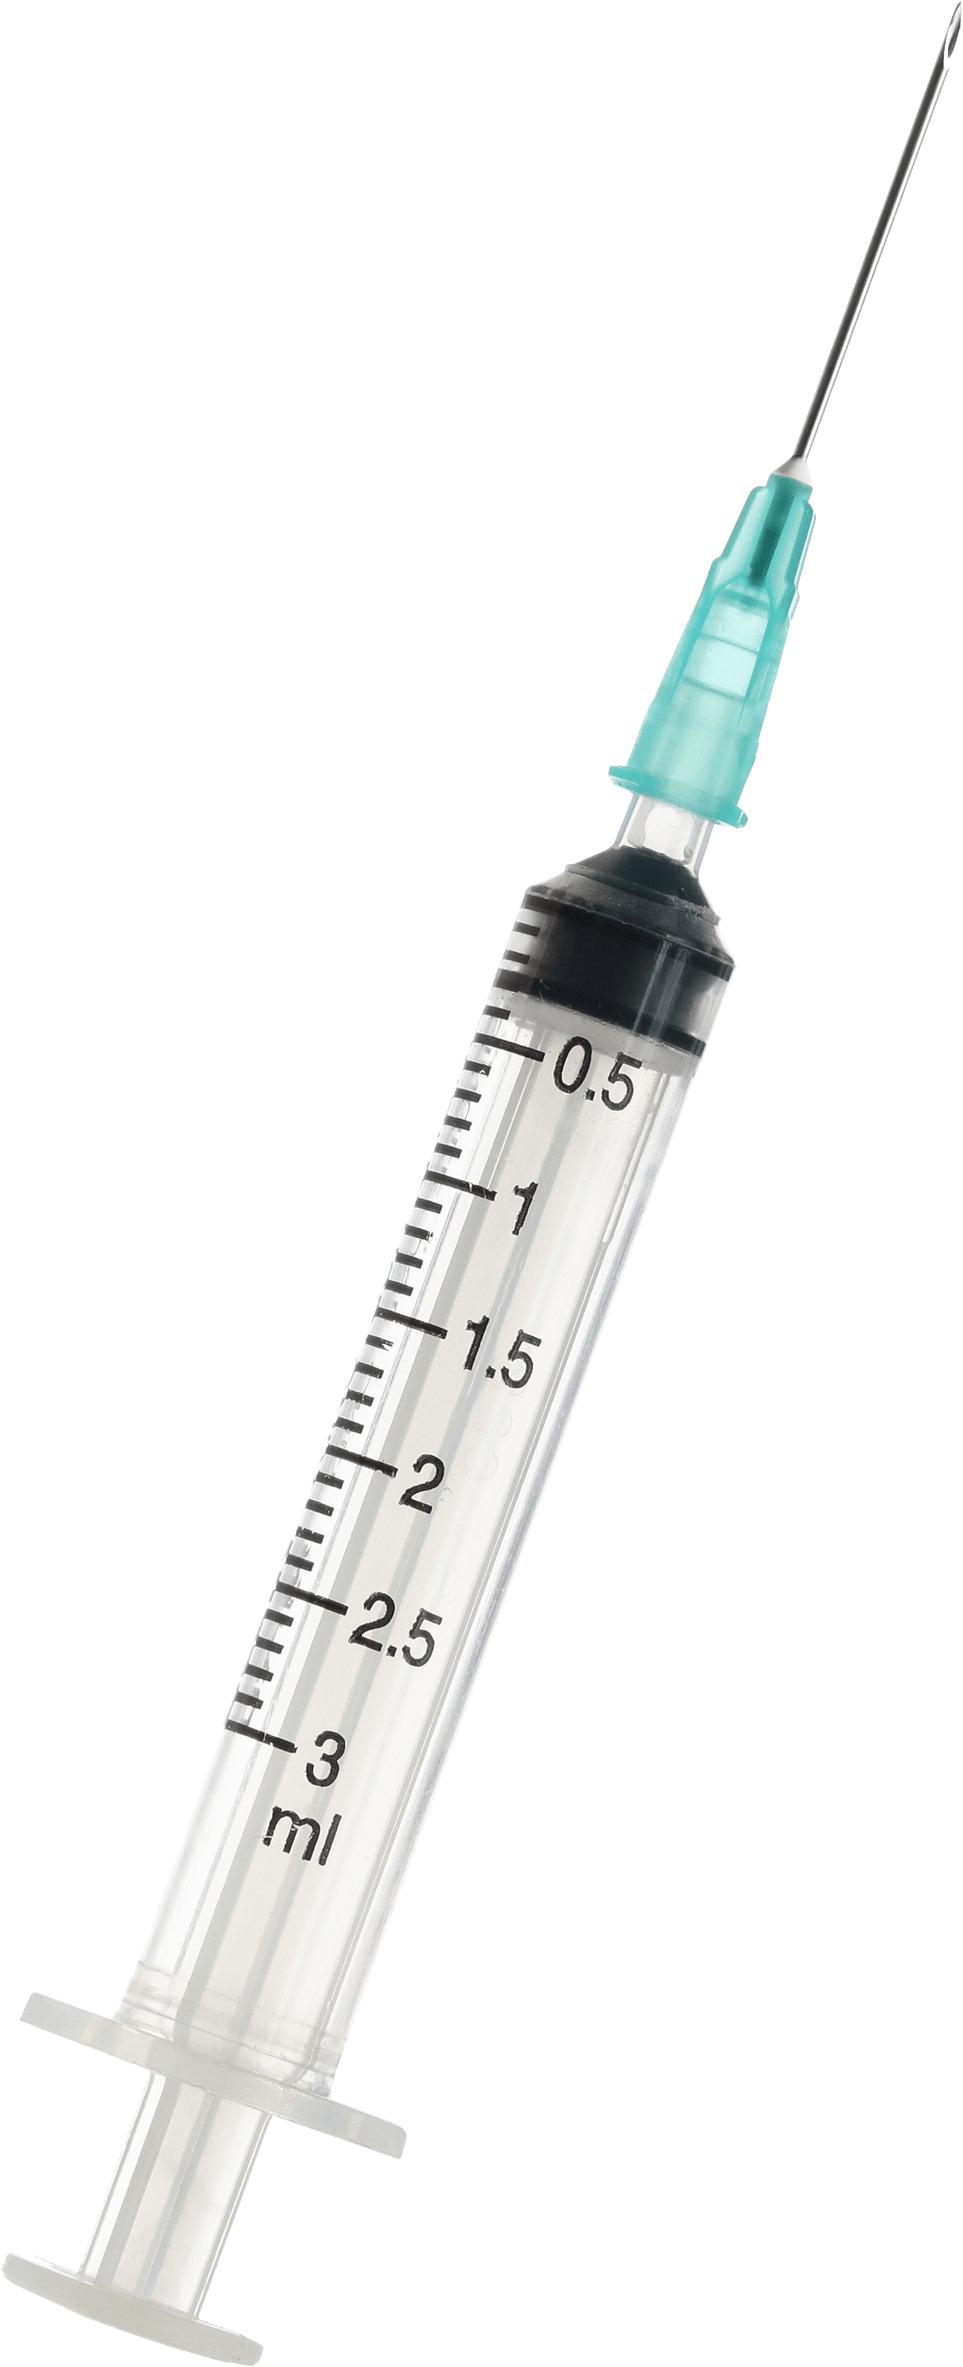 Syringe Small png transparent